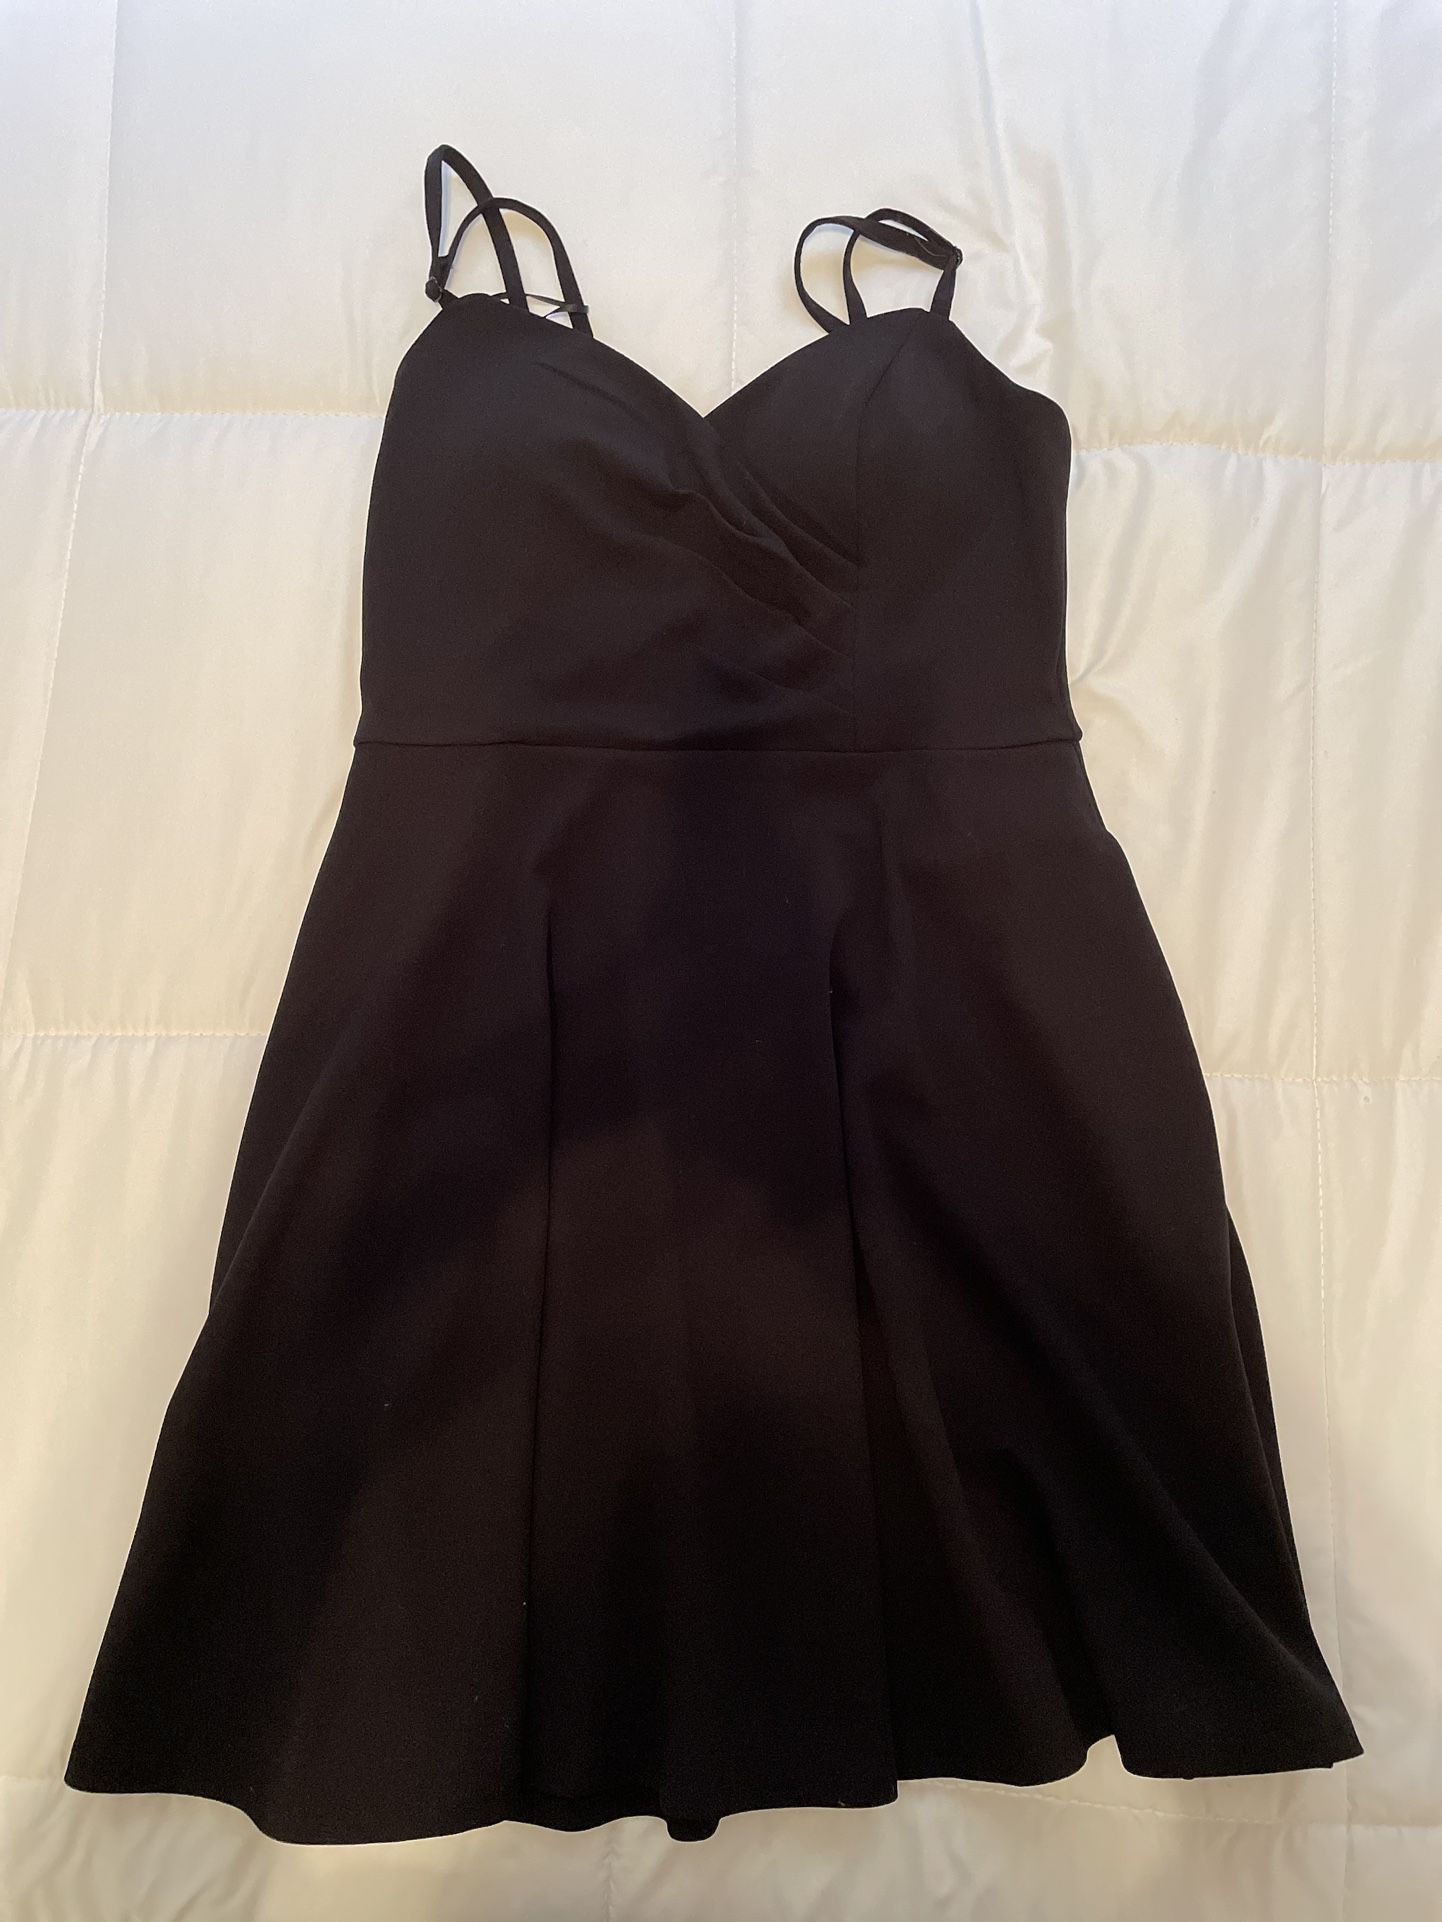 New With Tags Black Medium Francesca Dress